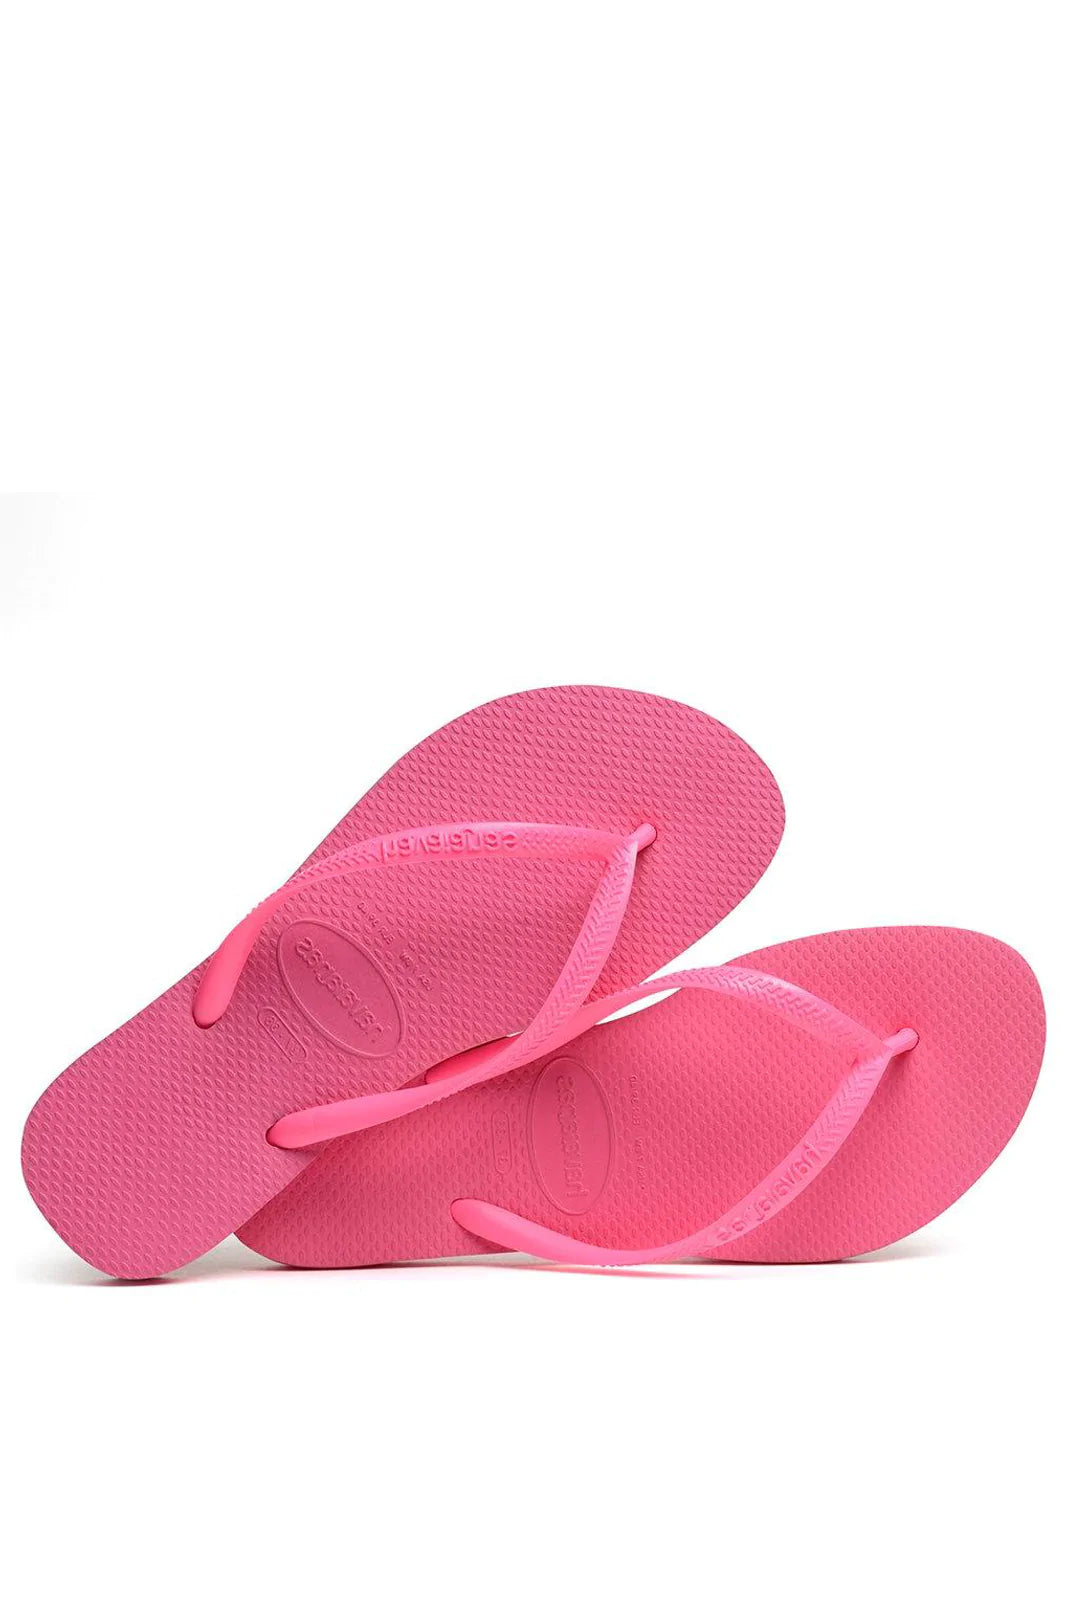 Havaianas Brasil flip-flop papucs, rózsaszín - MYBRANDS.HU